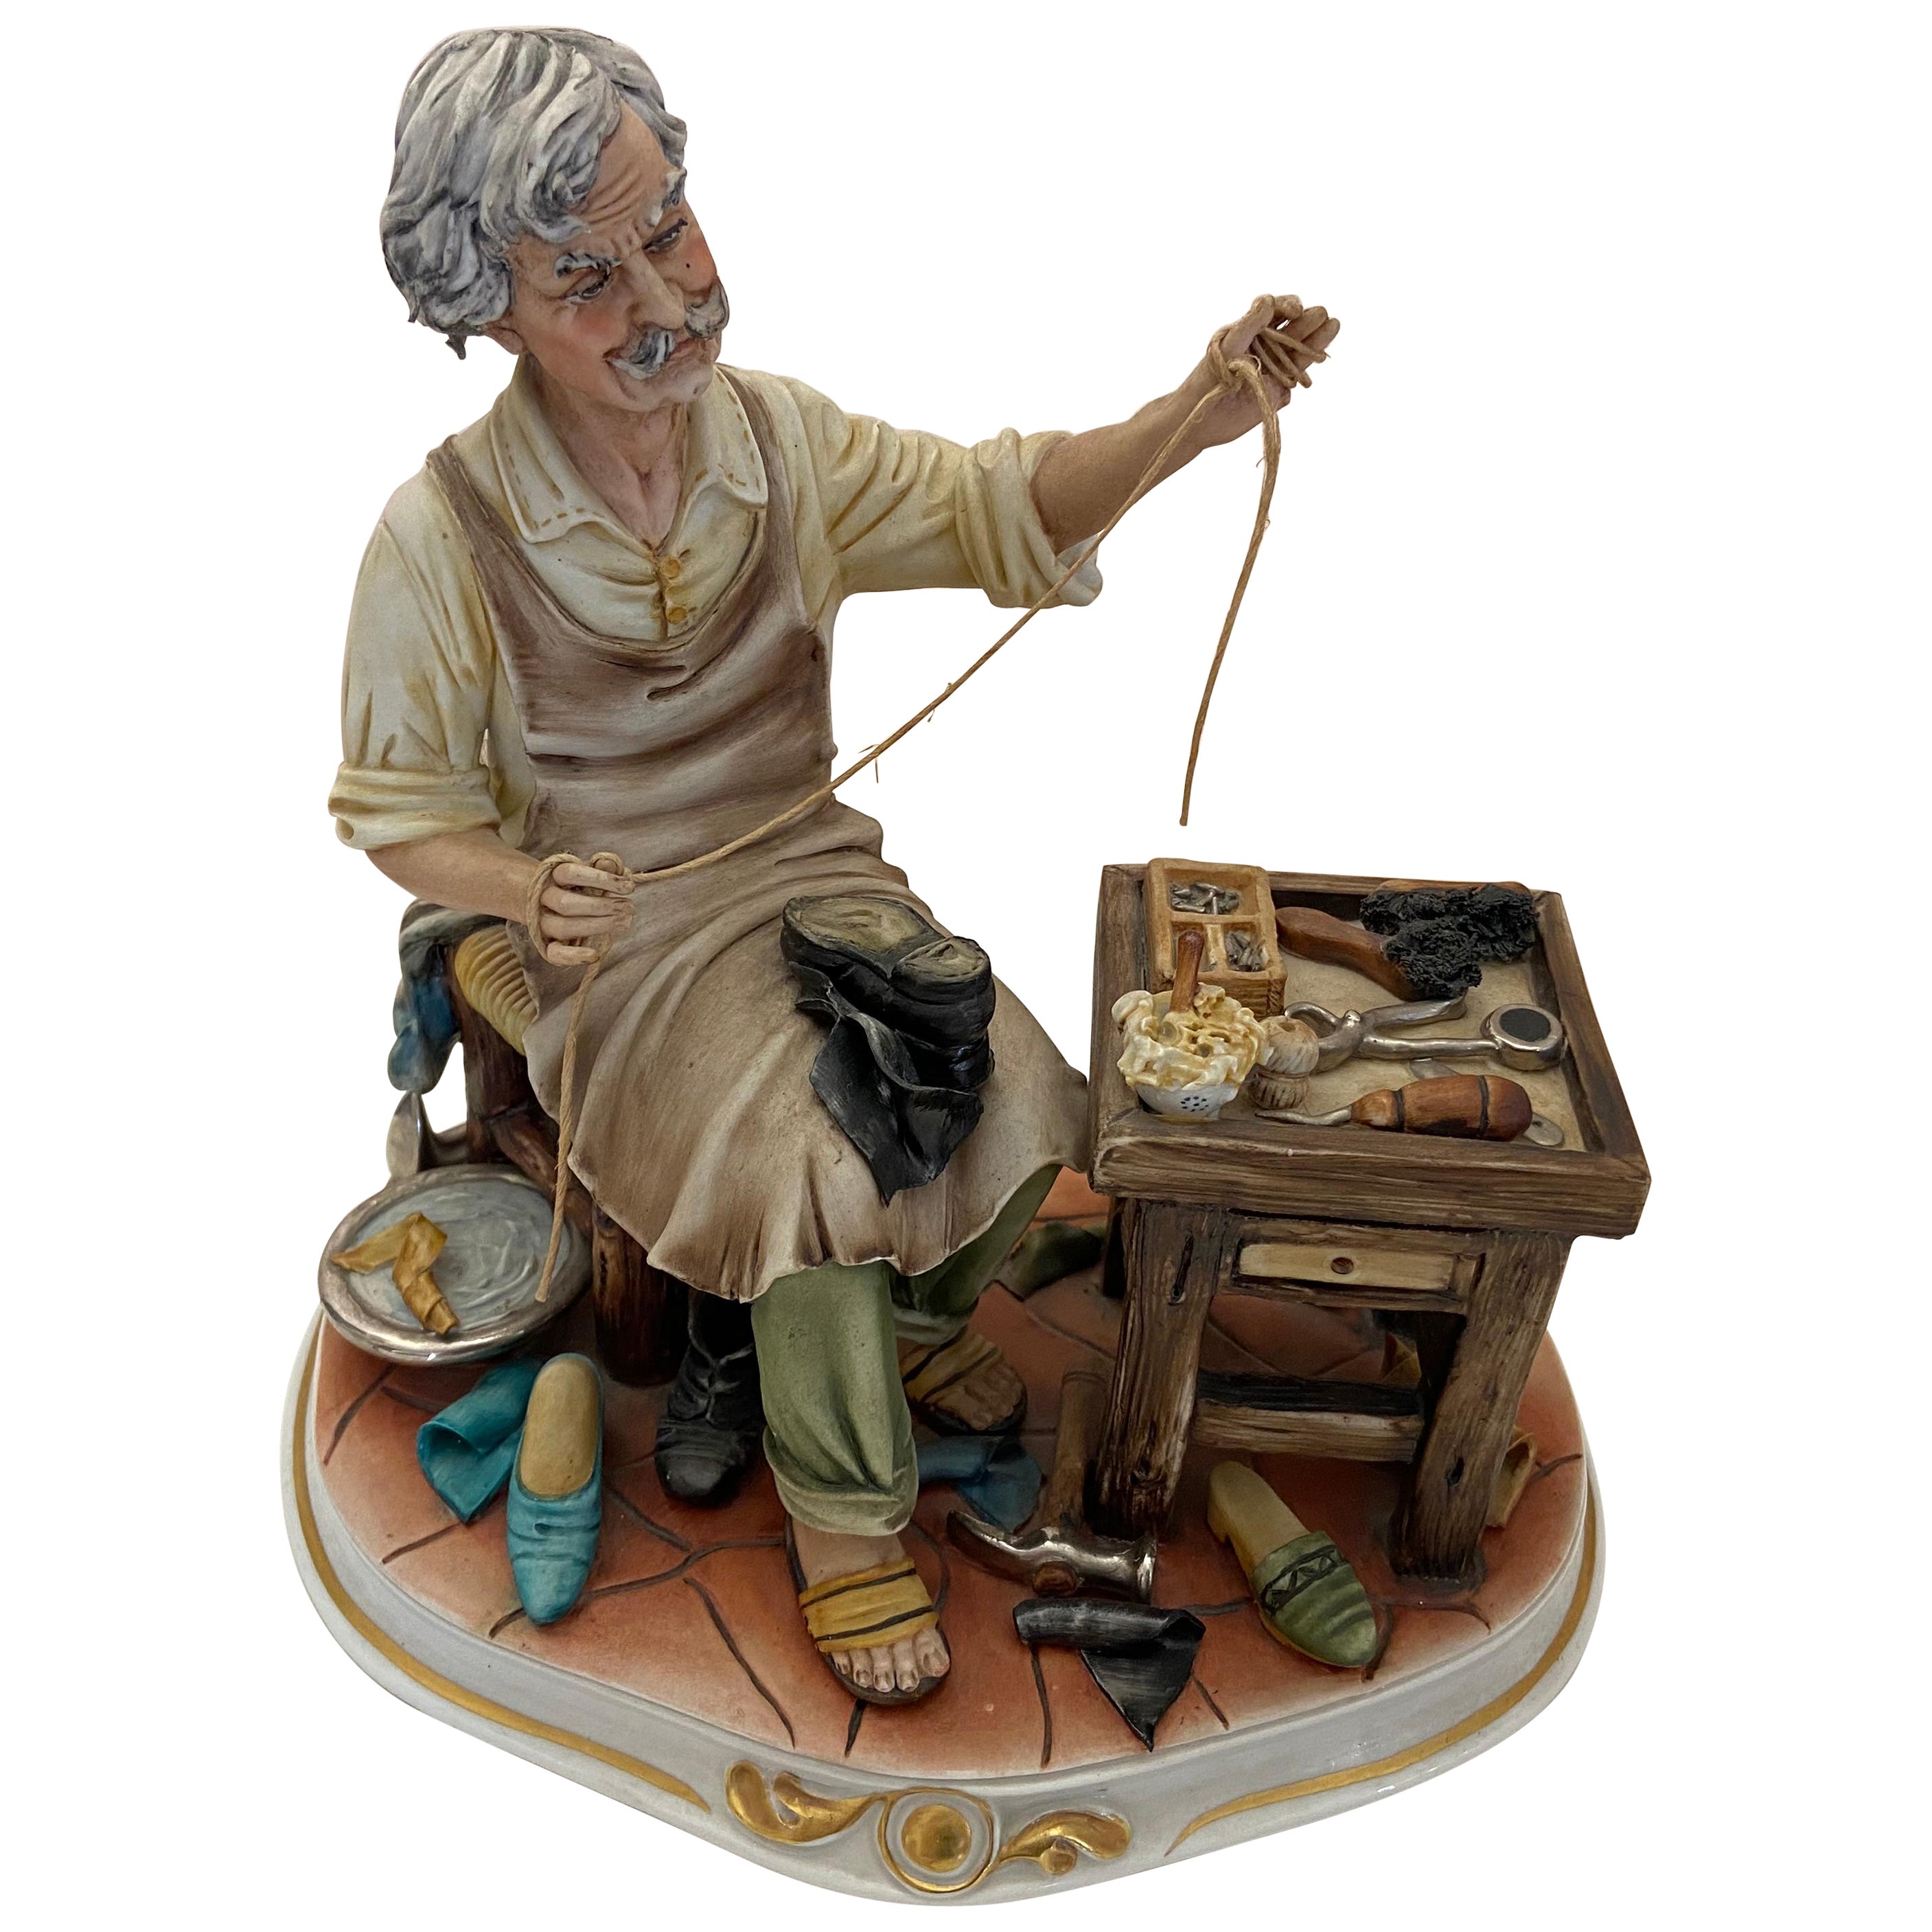 Capodimonte Porcelain Statuette By "Cortese", "The Shoemaker" For Sale